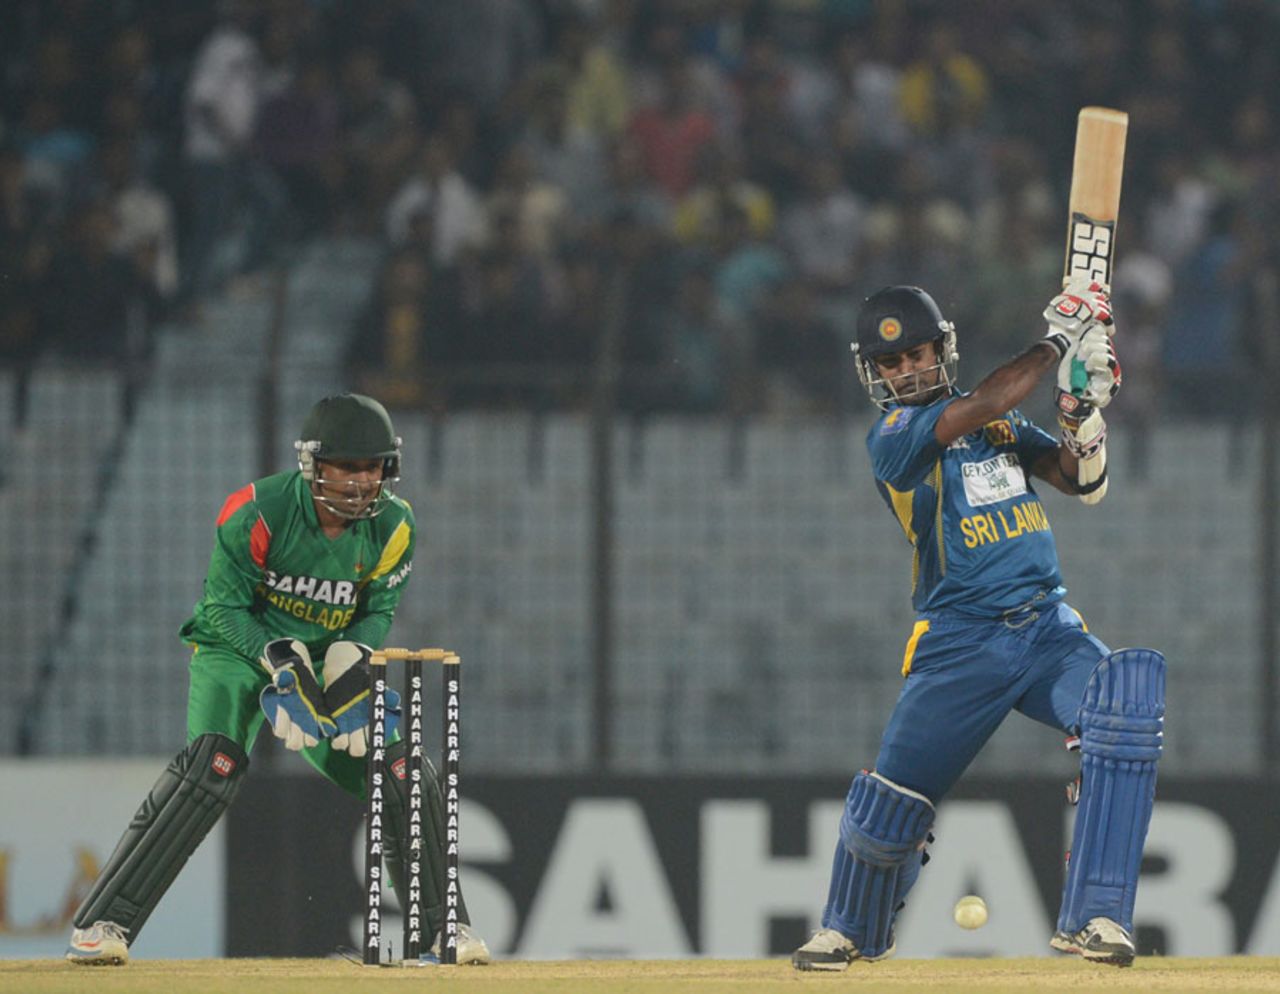 Nuwan Kulasekara flays the ball into the covers, Bangladesh v Sri Lanka, 1st T20, Chittagong, February 12, 2014